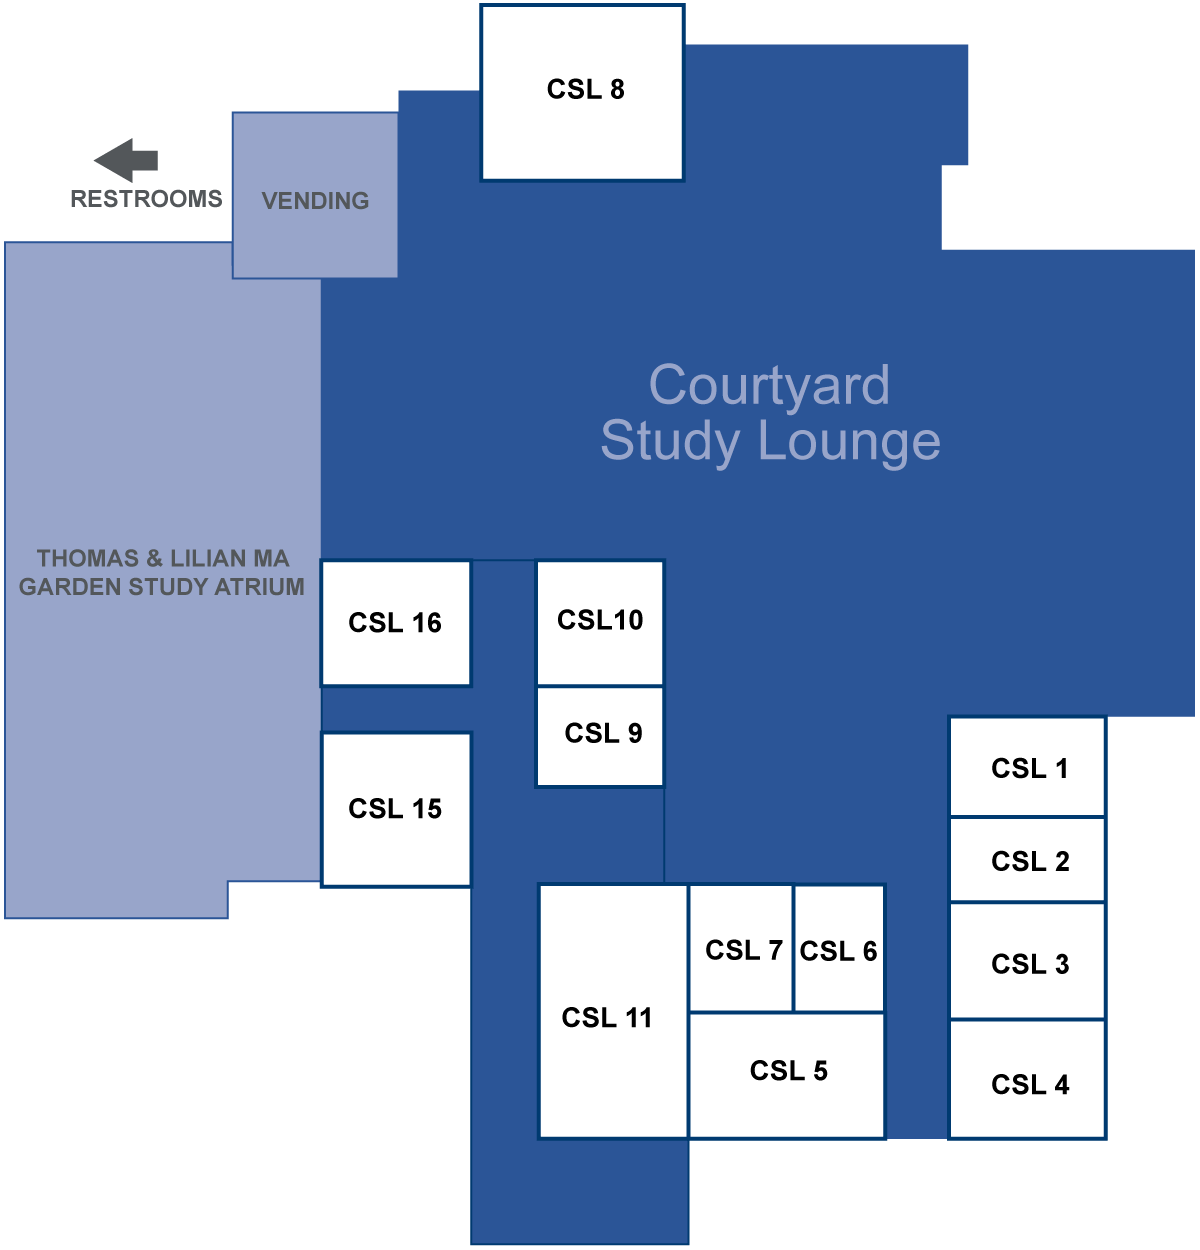 Courtyard Study Lounge